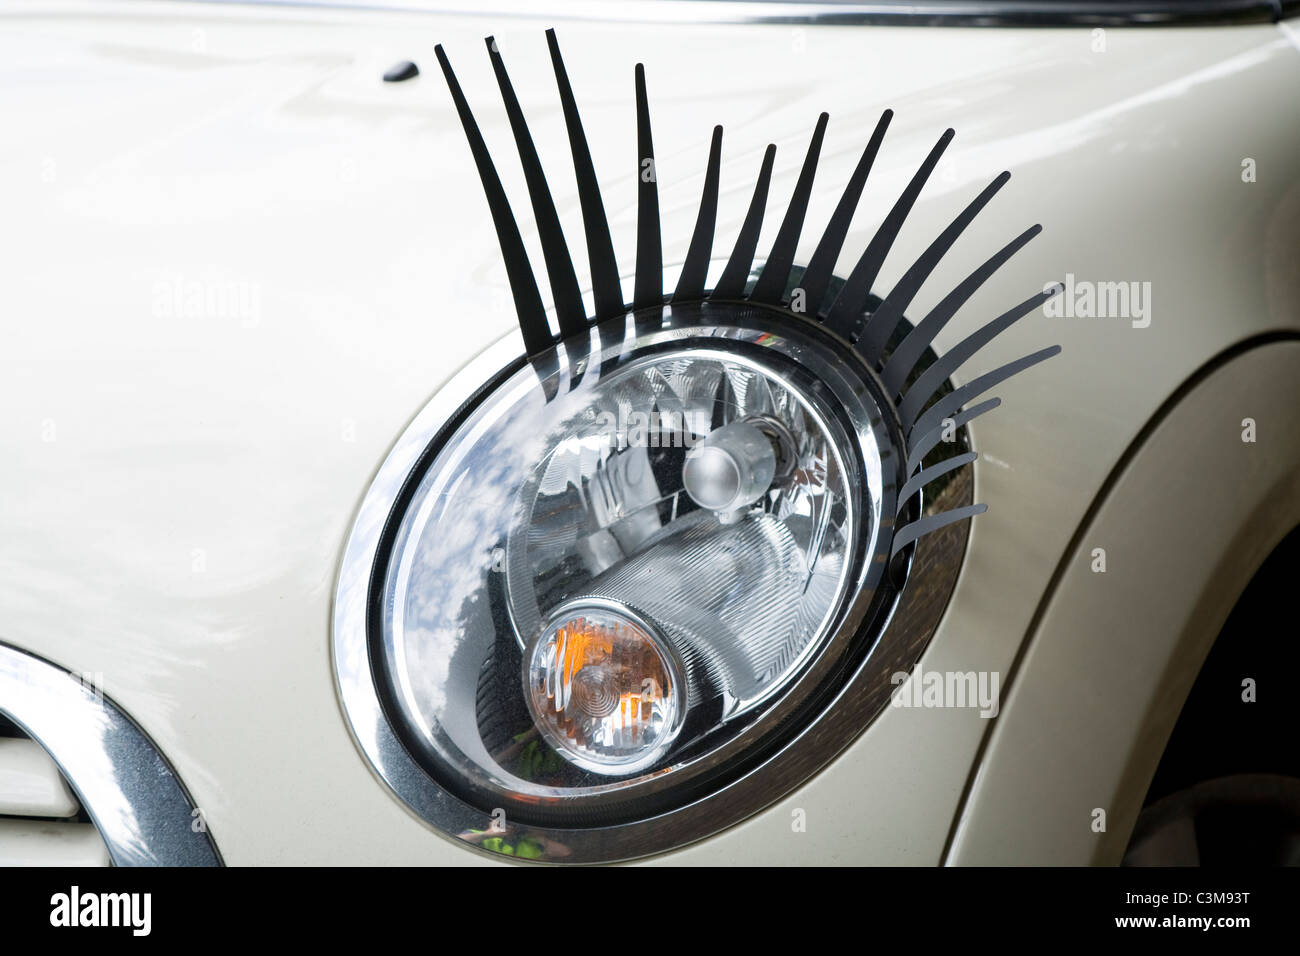 Eye lash / lashes / eyelash / eyelashes attached to a Mini car / car's headlamp / head lamp / headlight / light / lights. Stock Photo